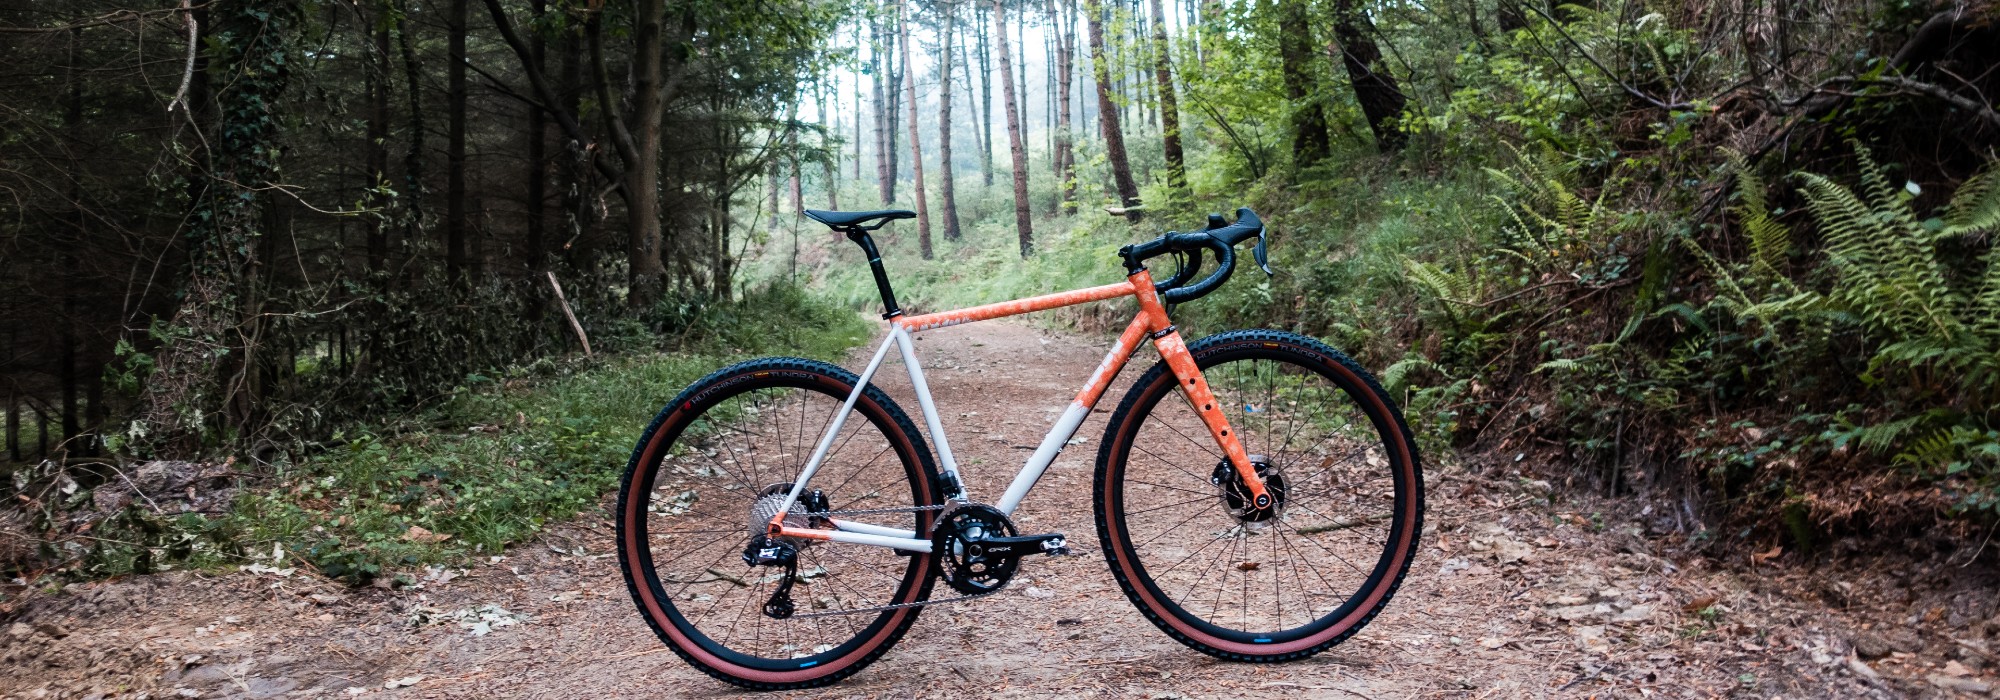 GRX-sykkel – ibai fradejas